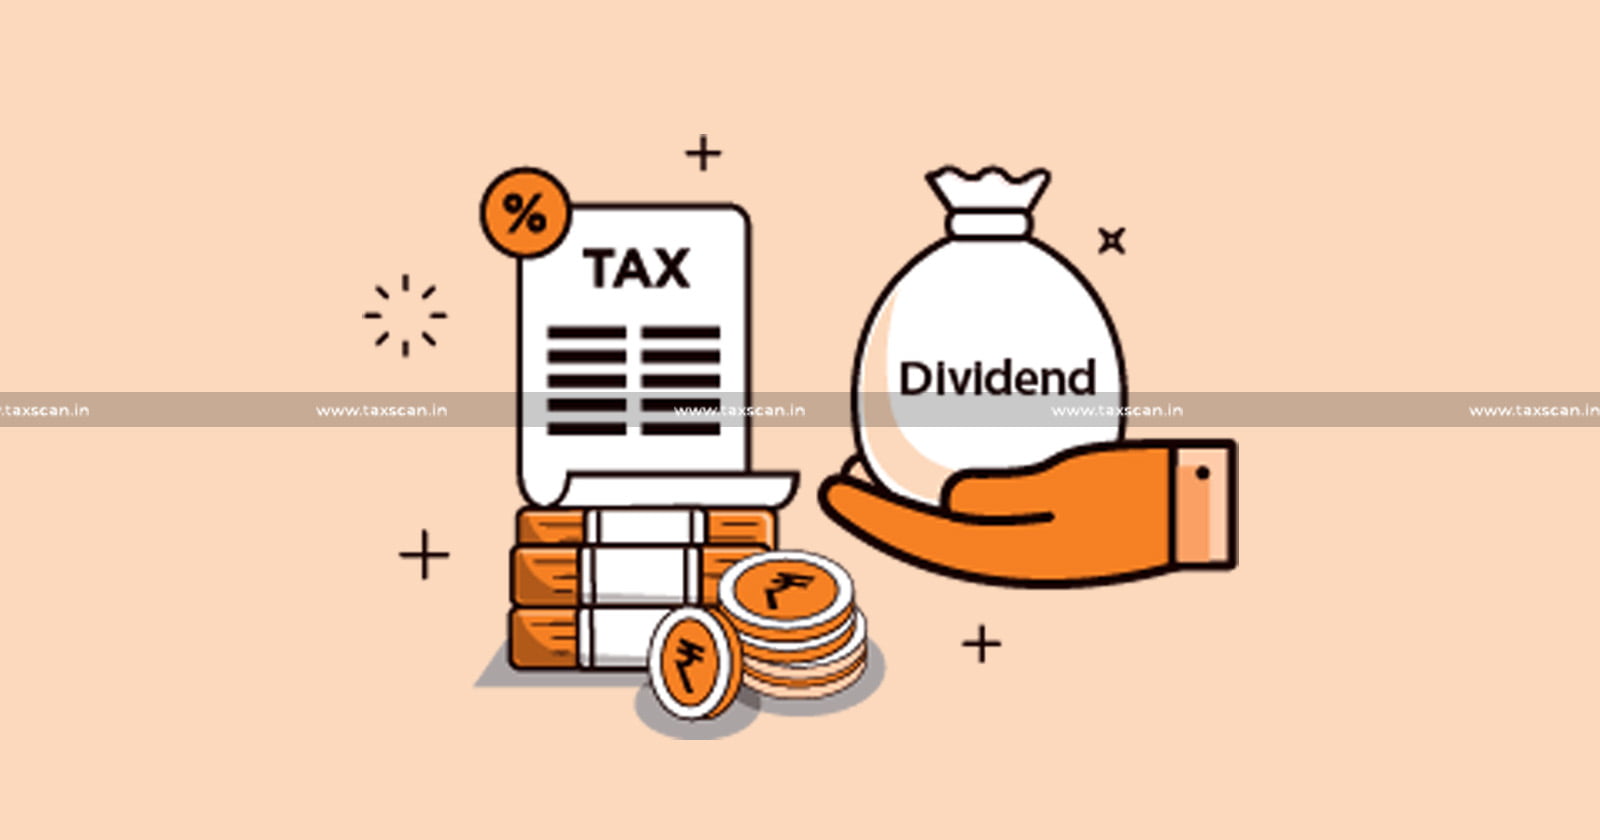 Profit - Sharing - MoU - Deemed - Dividend - ITAT -TAXSCAN